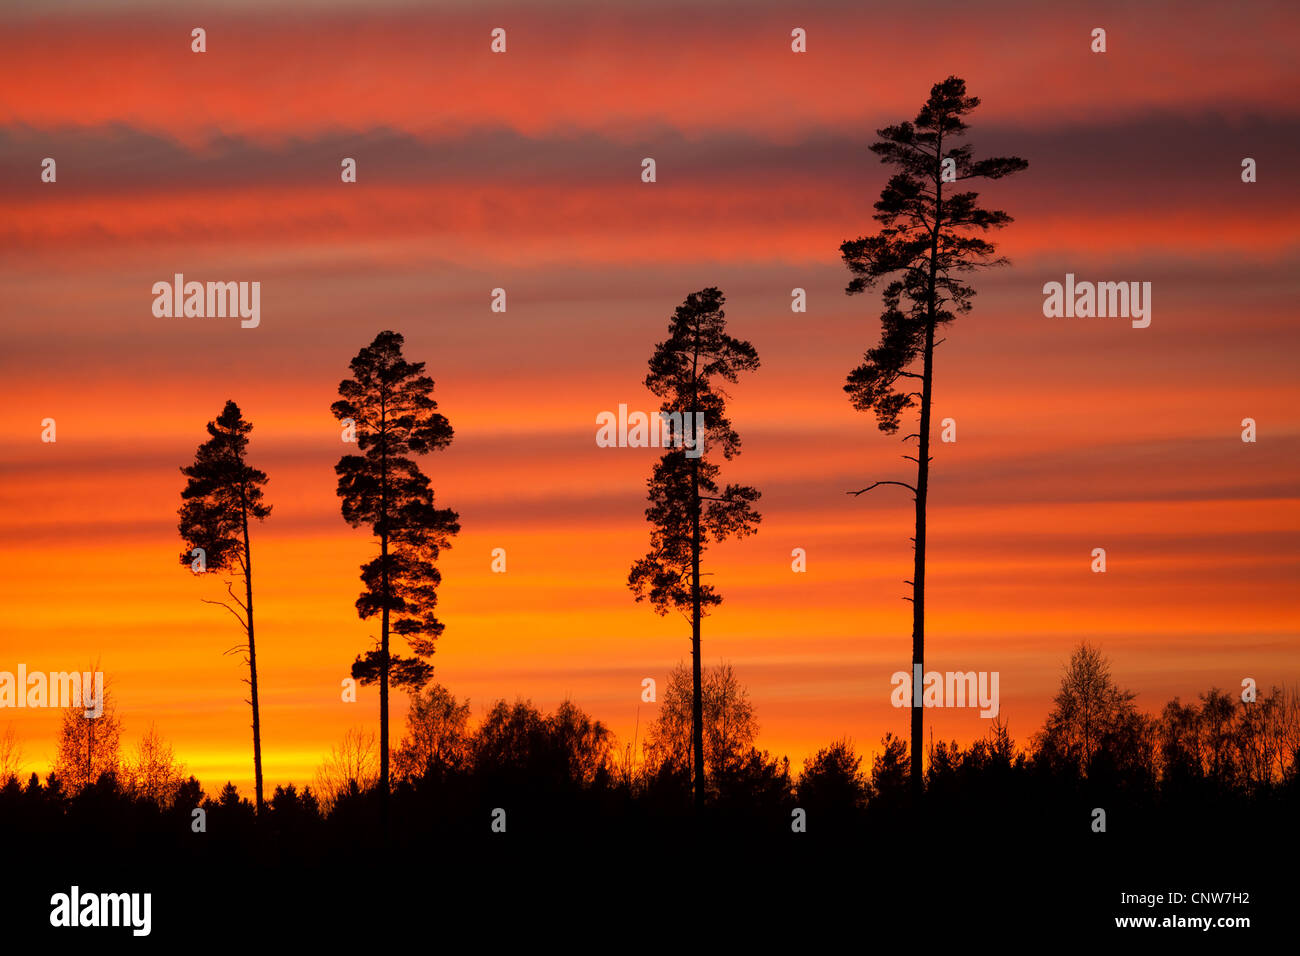 Tall pine trees and colorful skies at dusk in Råde kommune, Østfold fylke, Norway. Stock Photo